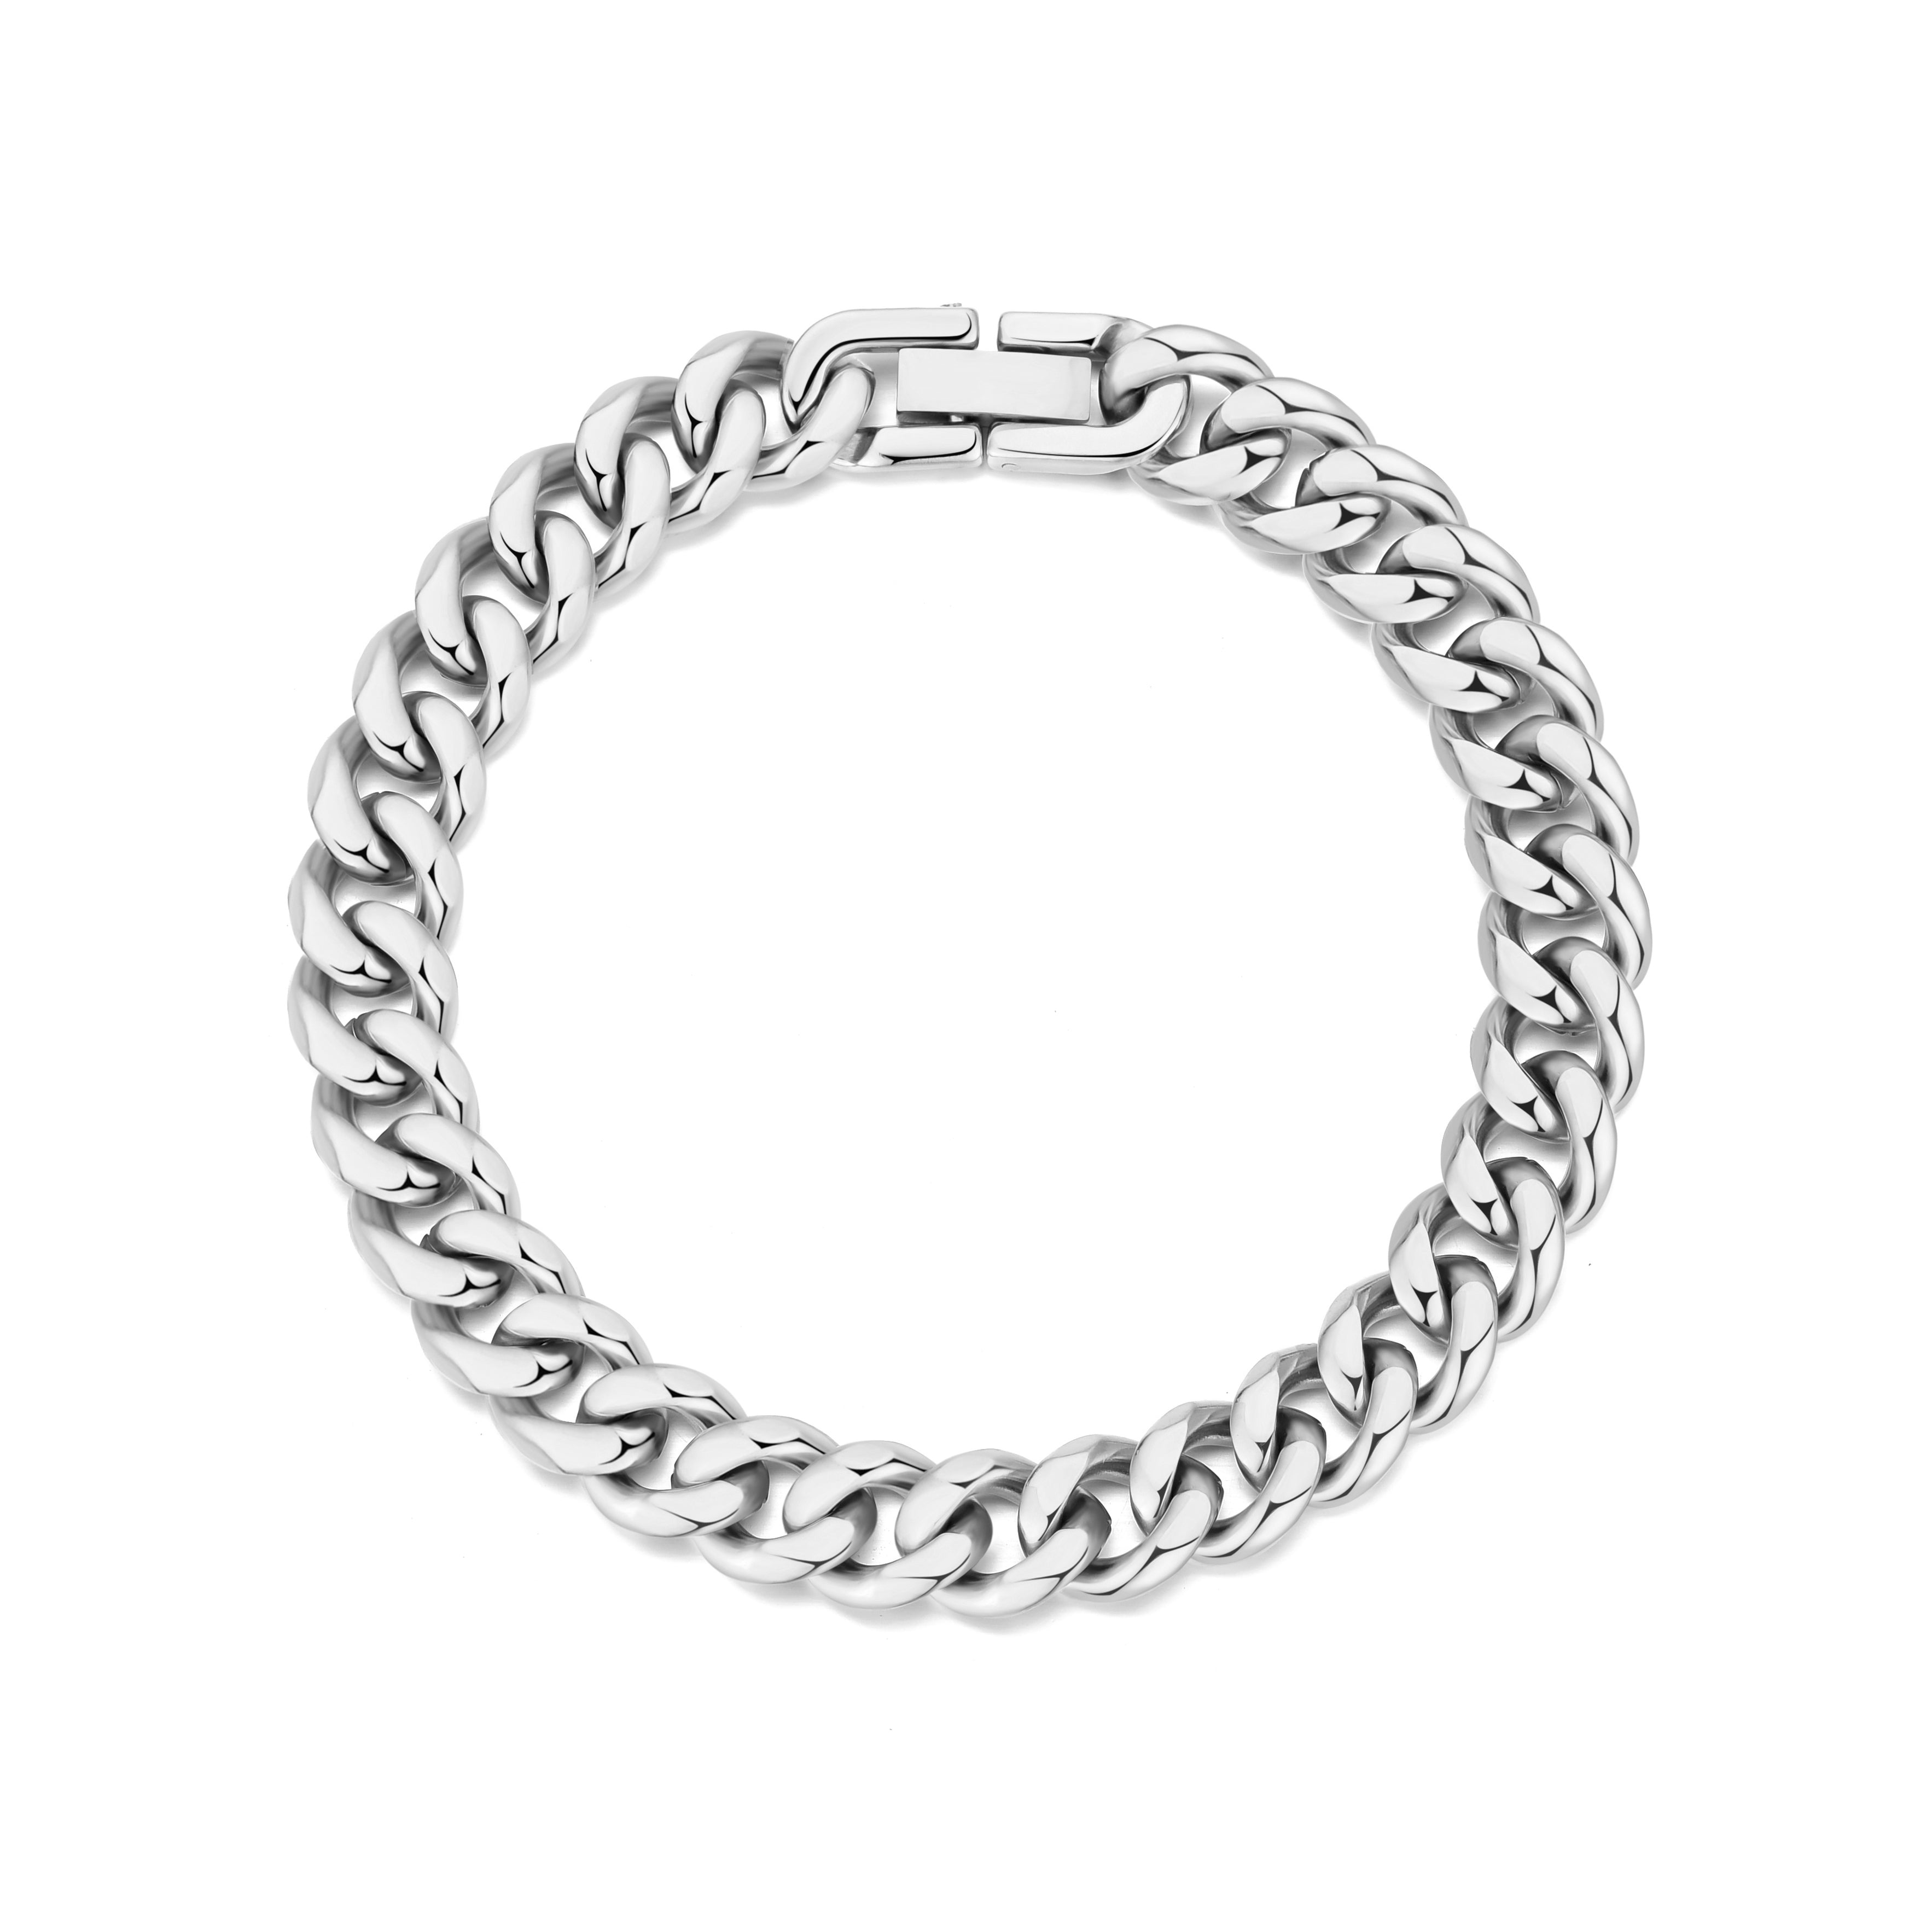 Men's 9mm Stainless Steel 7.5-8.5 Inch Curb Chain Bracelet by Philip Jones Jewellery